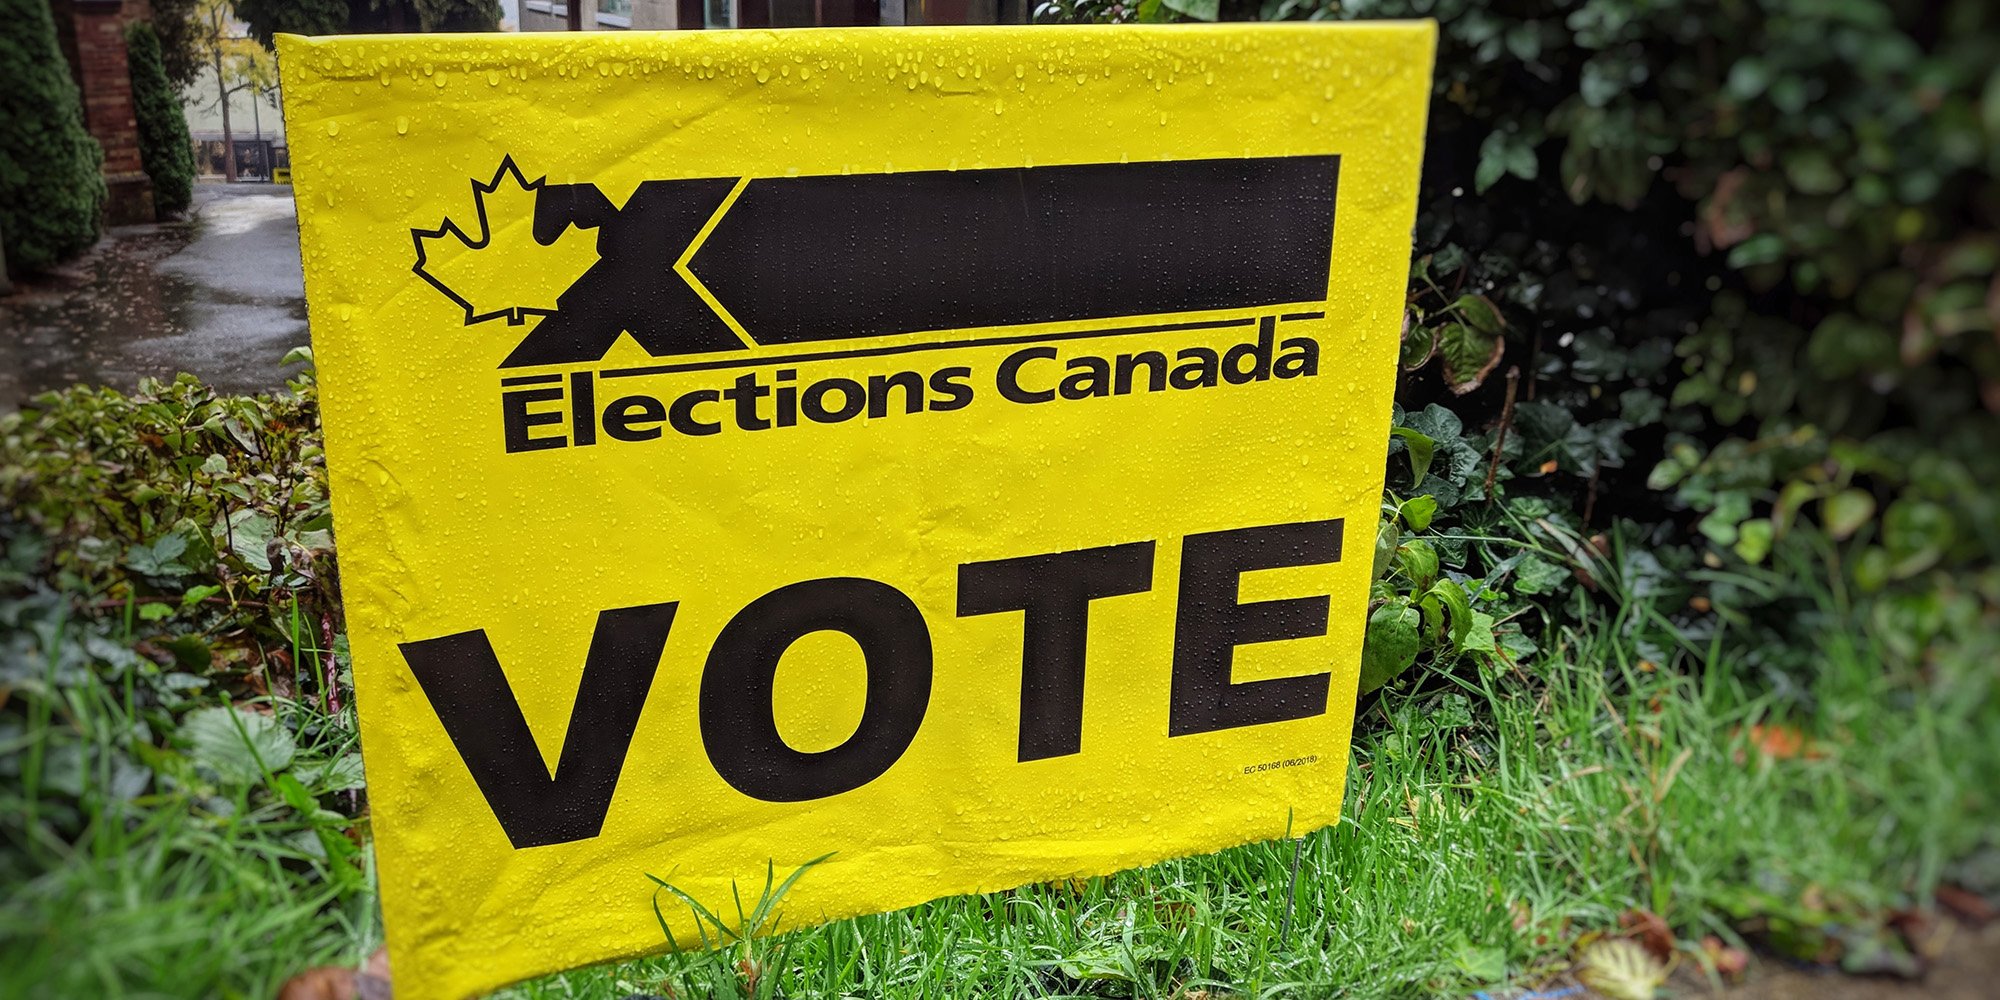 Elections Canada vote sign. Photo: dennissylvesterhurd 48936368453